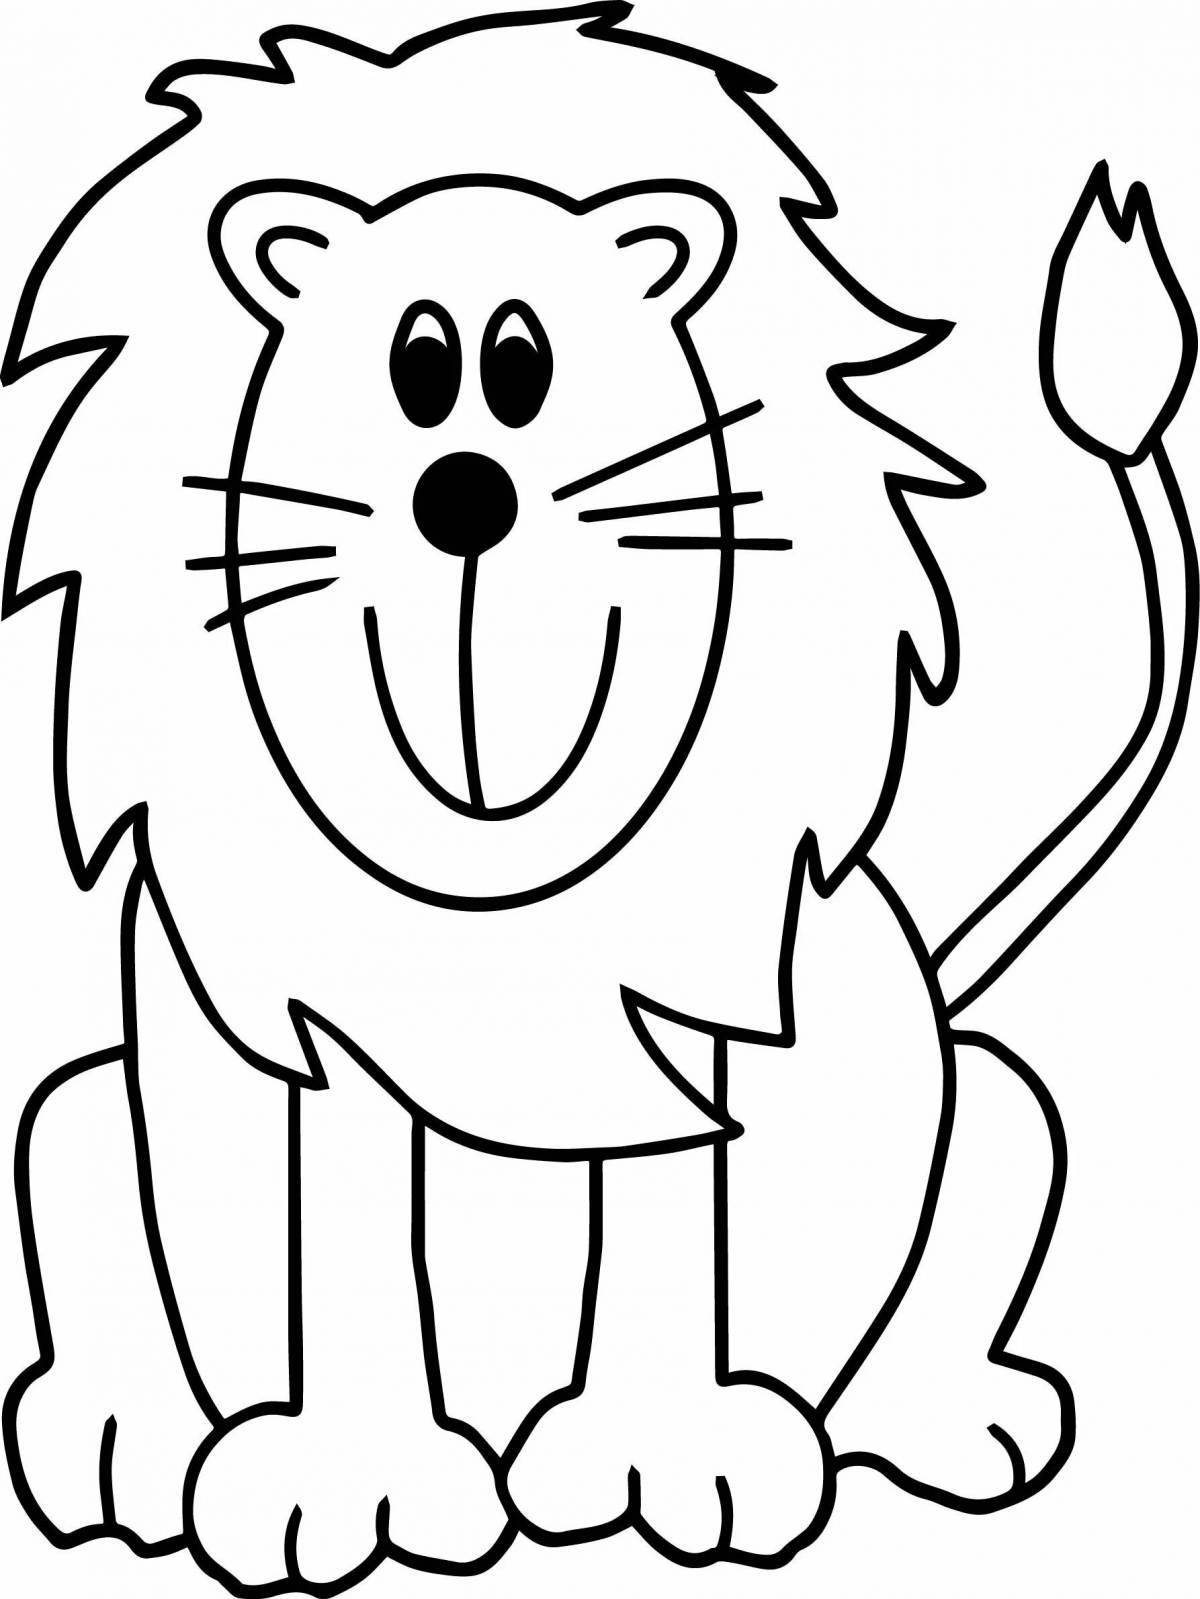 Exquisite lion coloring page